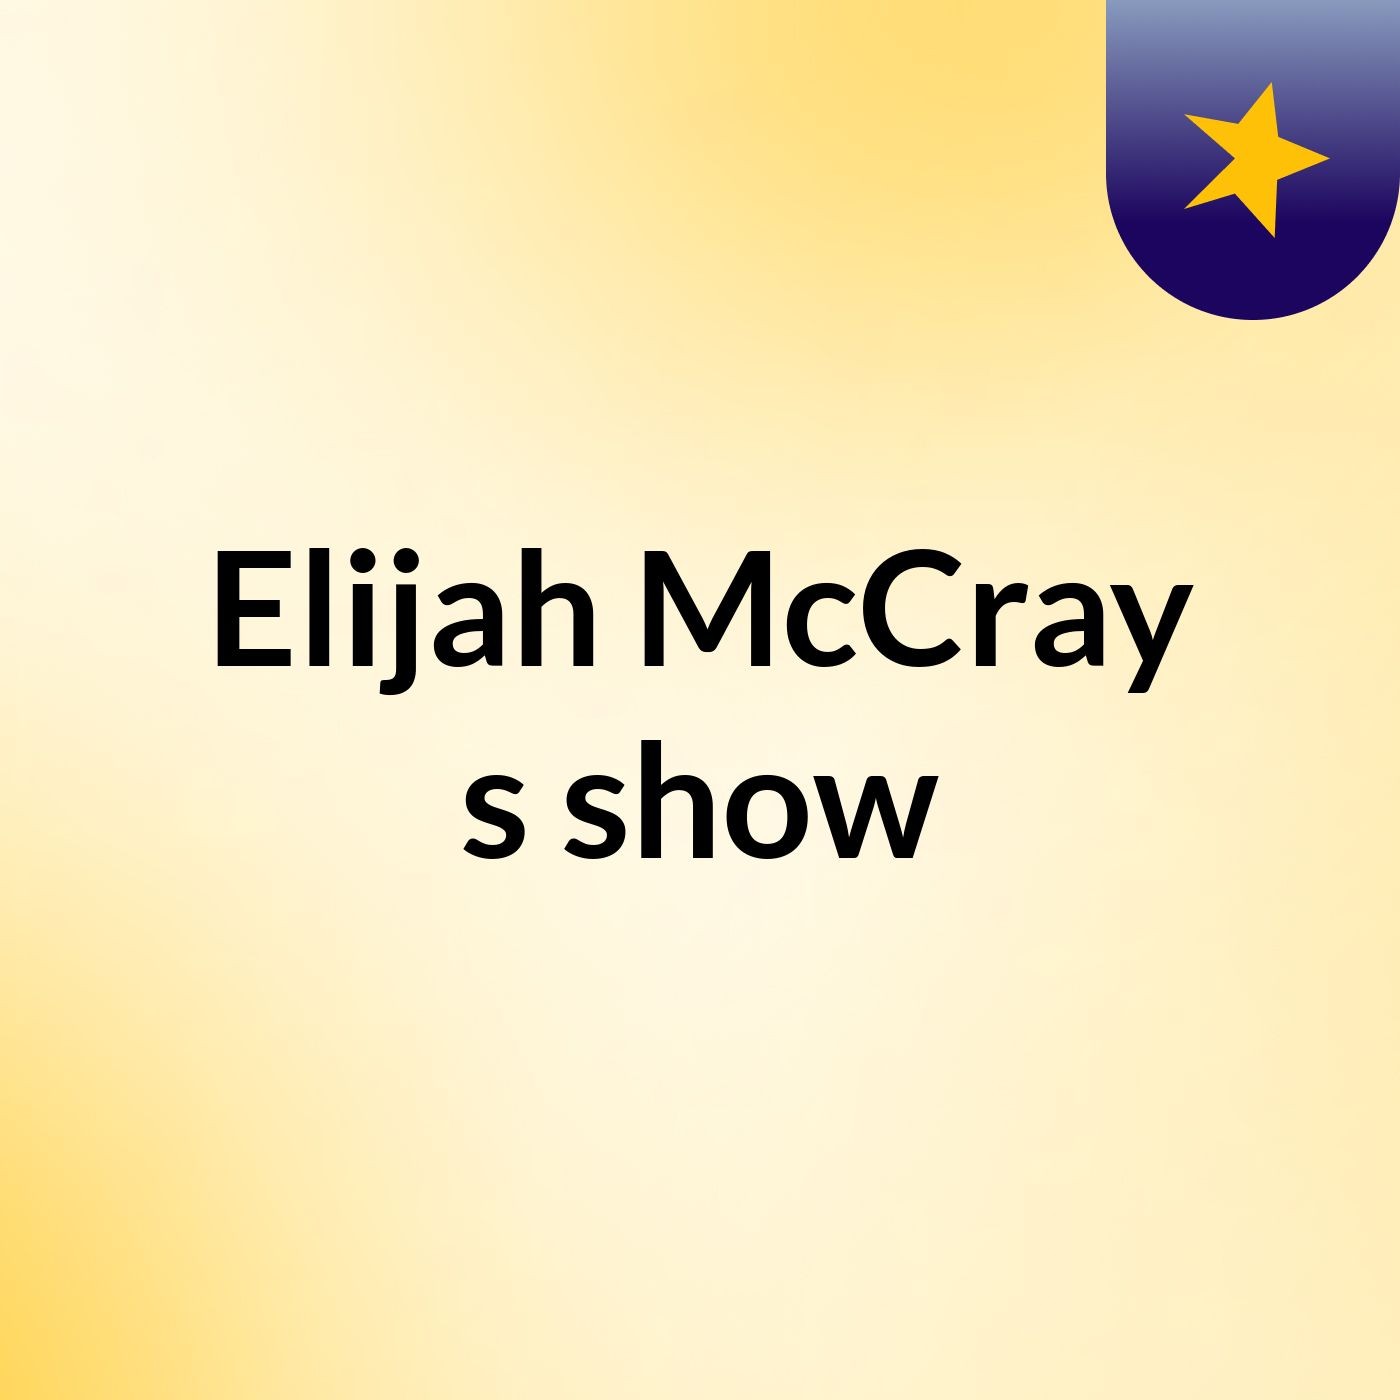 Elijah McCray's show